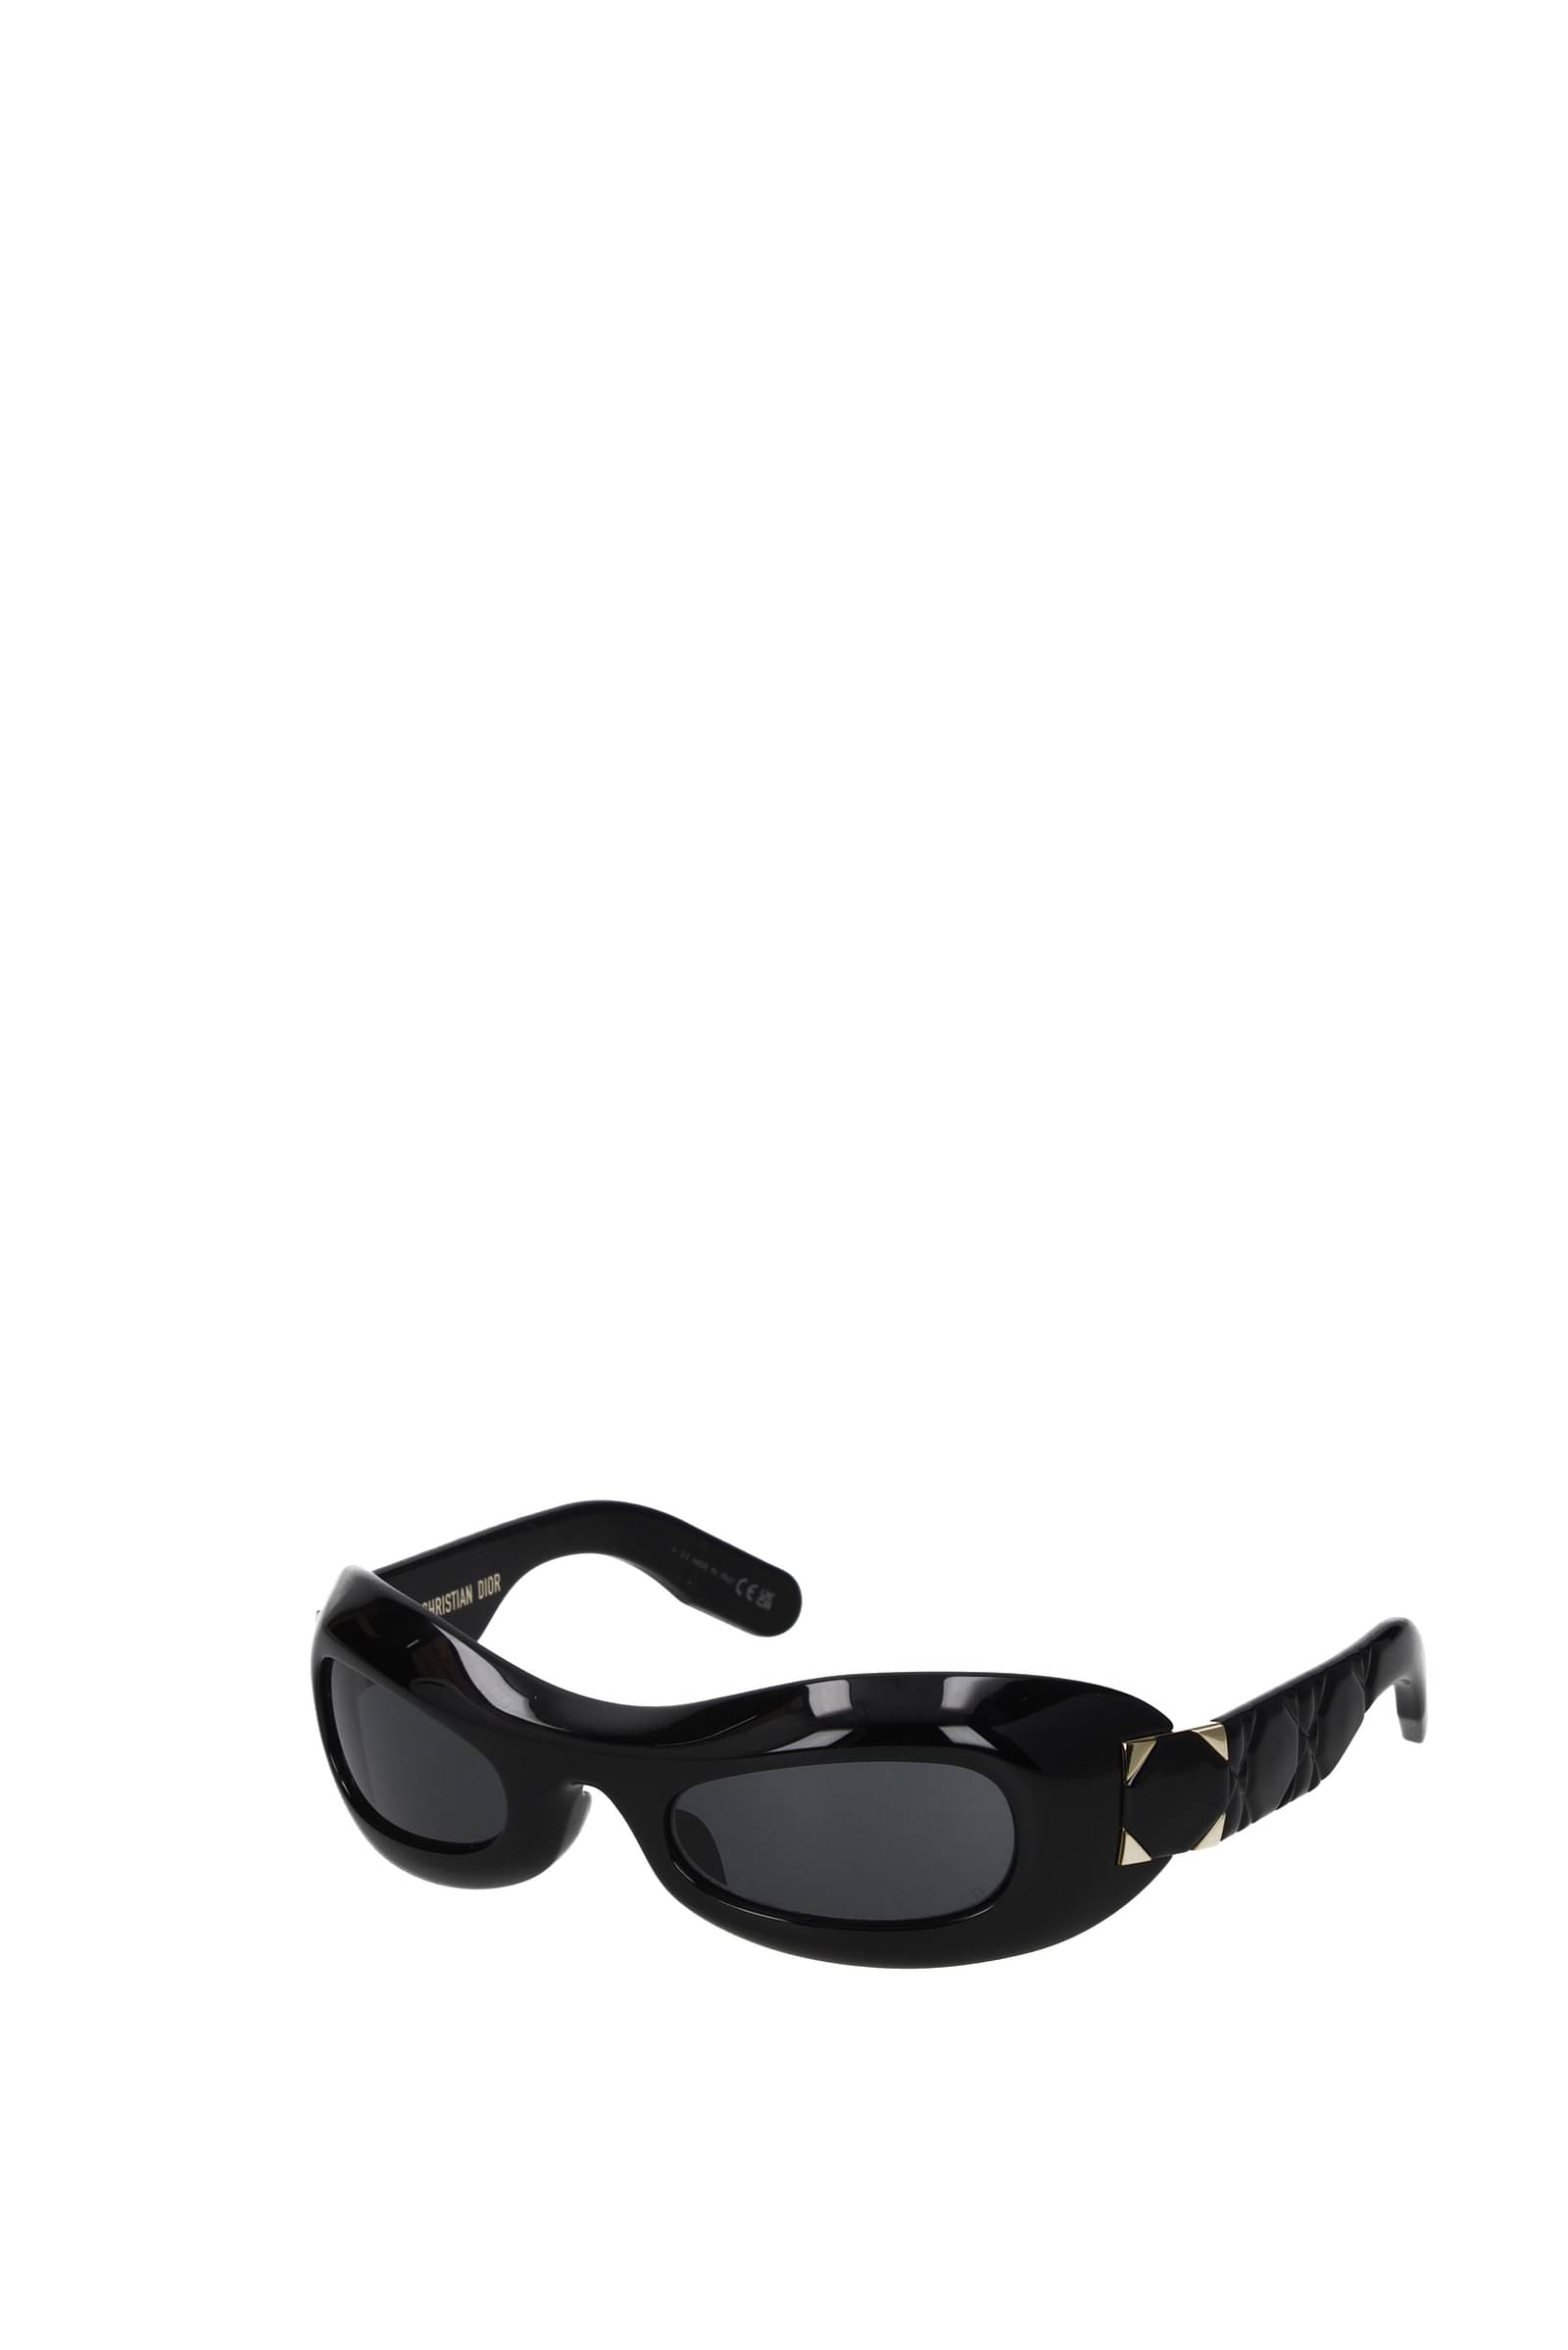 Shop Dior Wildior S2U 53MM Geometric Sunglasses | Saks Fifth Avenue